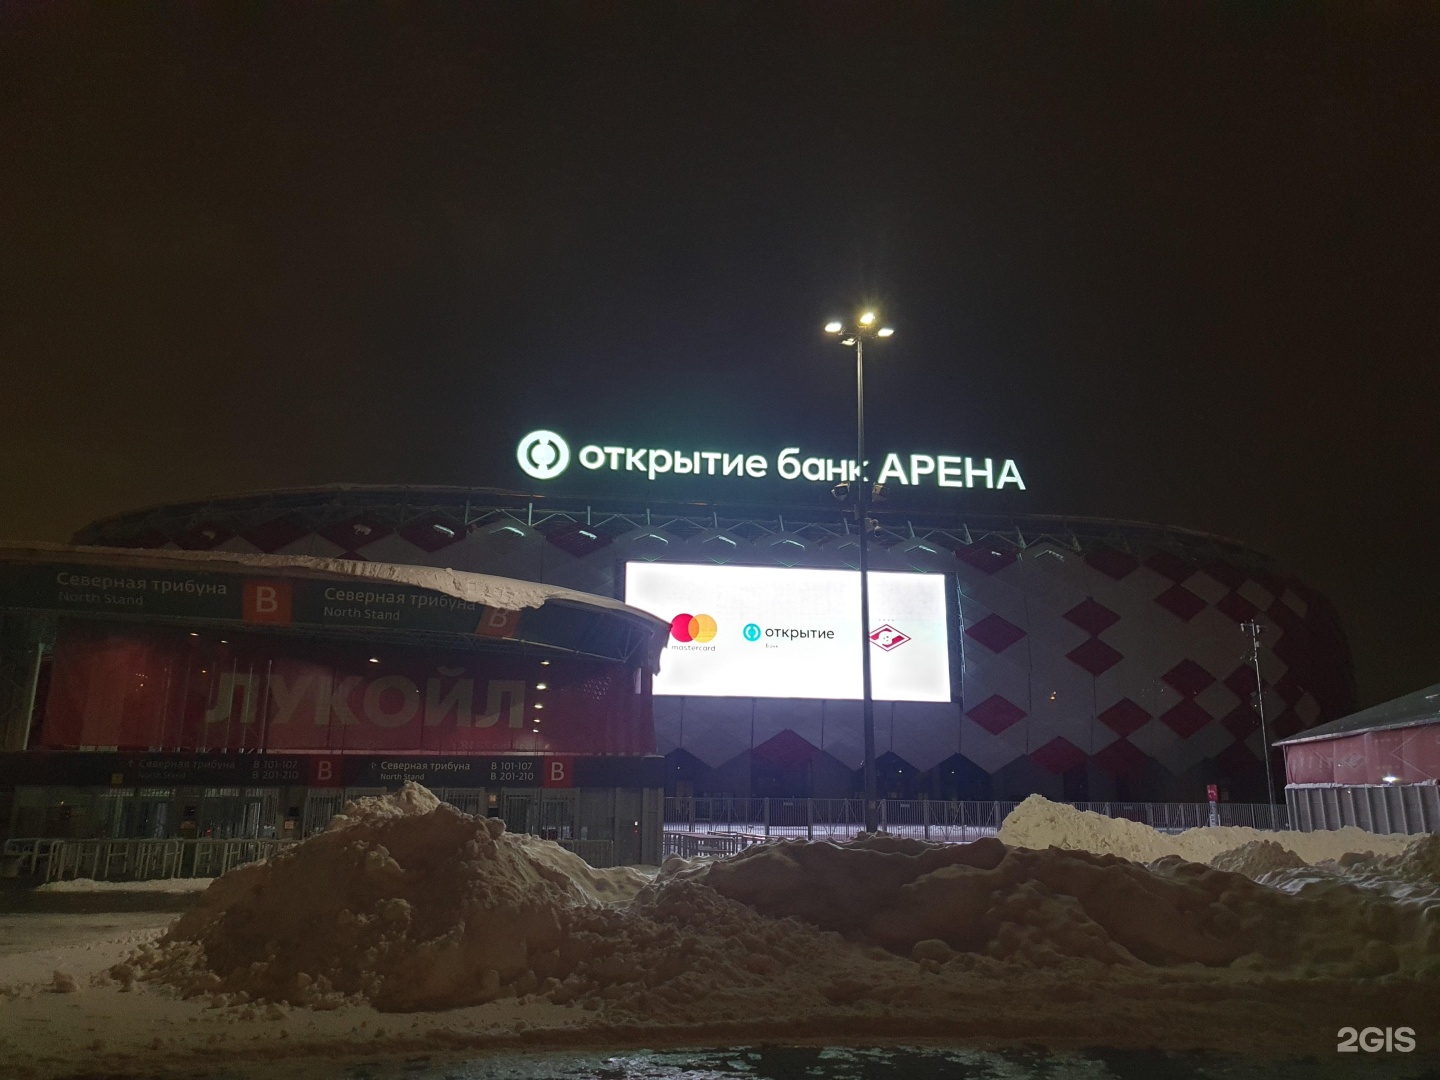 Opening arena